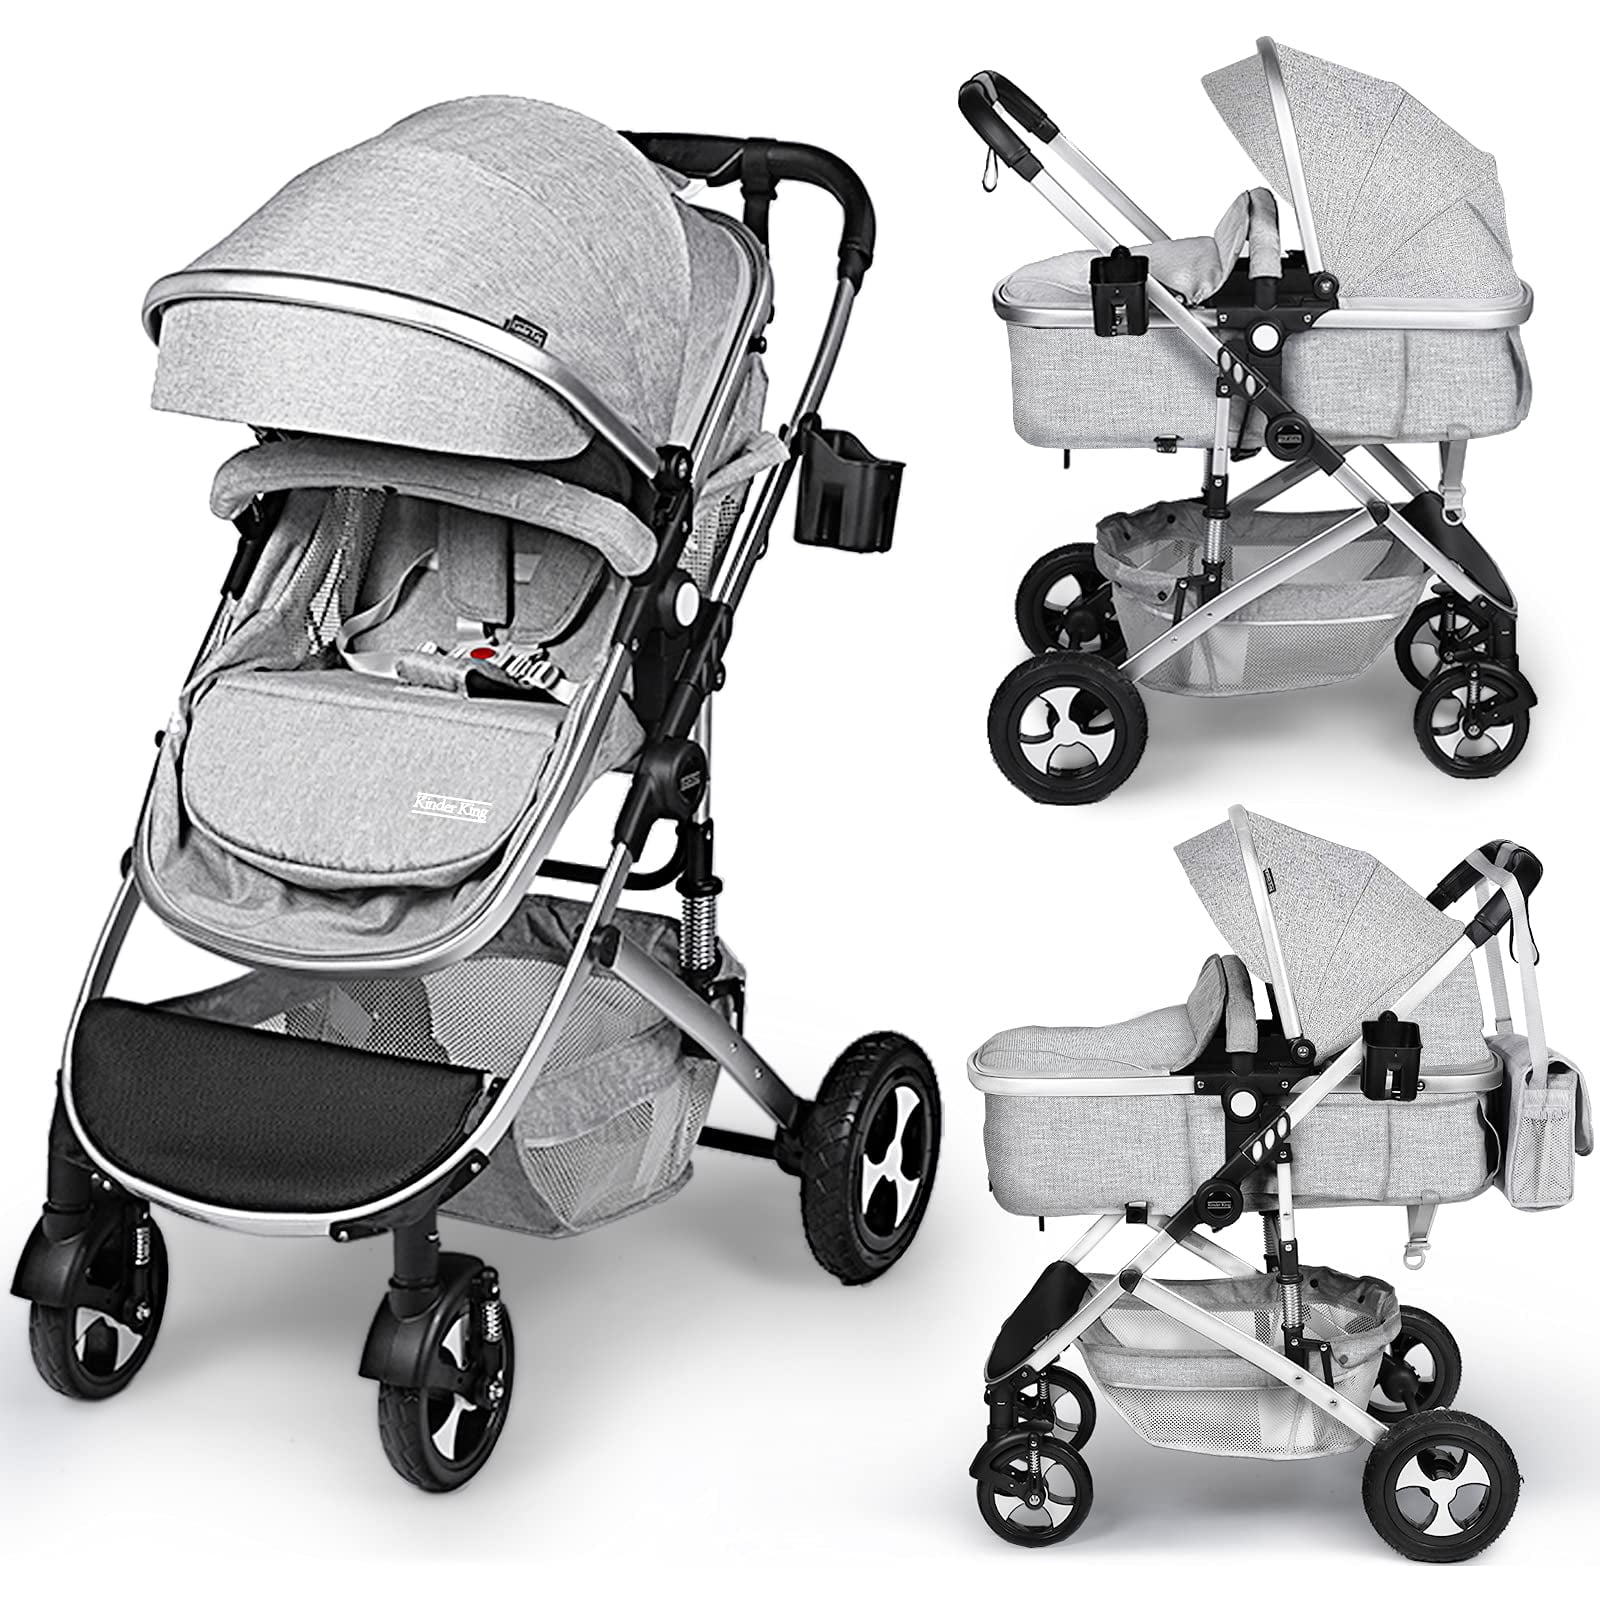 Kinder King 2 in 1 Convertible Baby Stroller Folding Infant Newborn Reversible Bassinet Pram, Light Grey